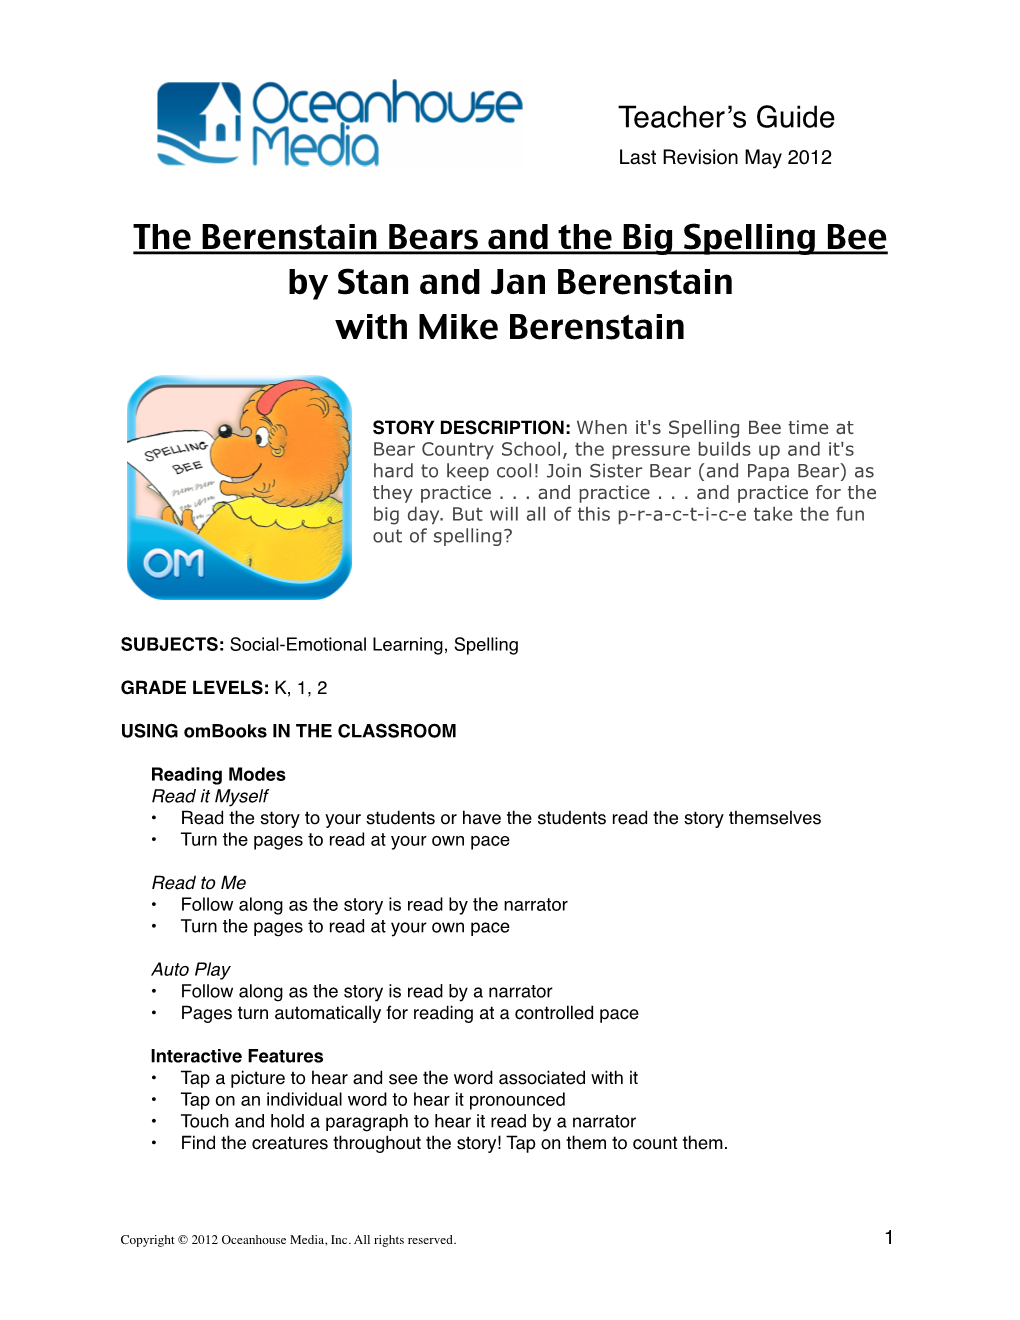 Berenstain Bears Big Spelling Bee Teacher's Guide